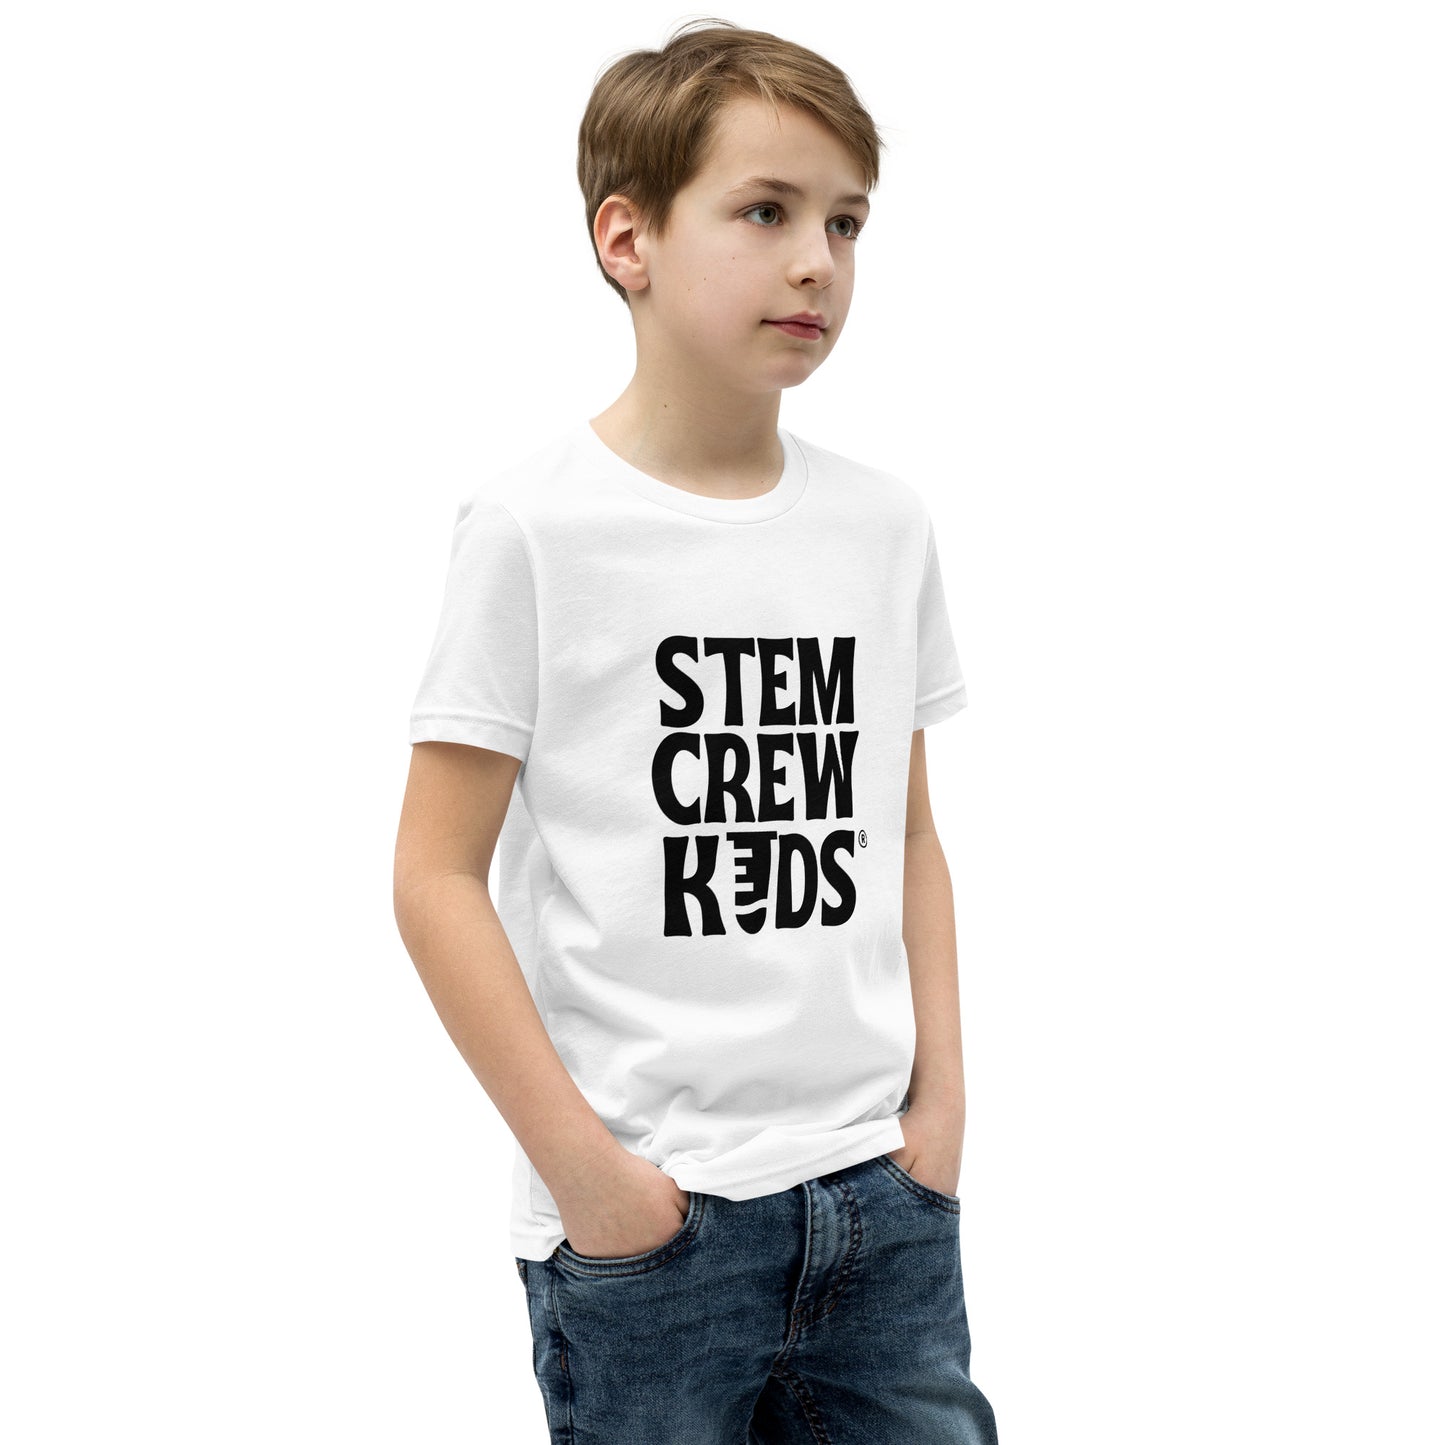 STEM Crew Kids Youth Short Sleeve T-Shirt (Black & White)